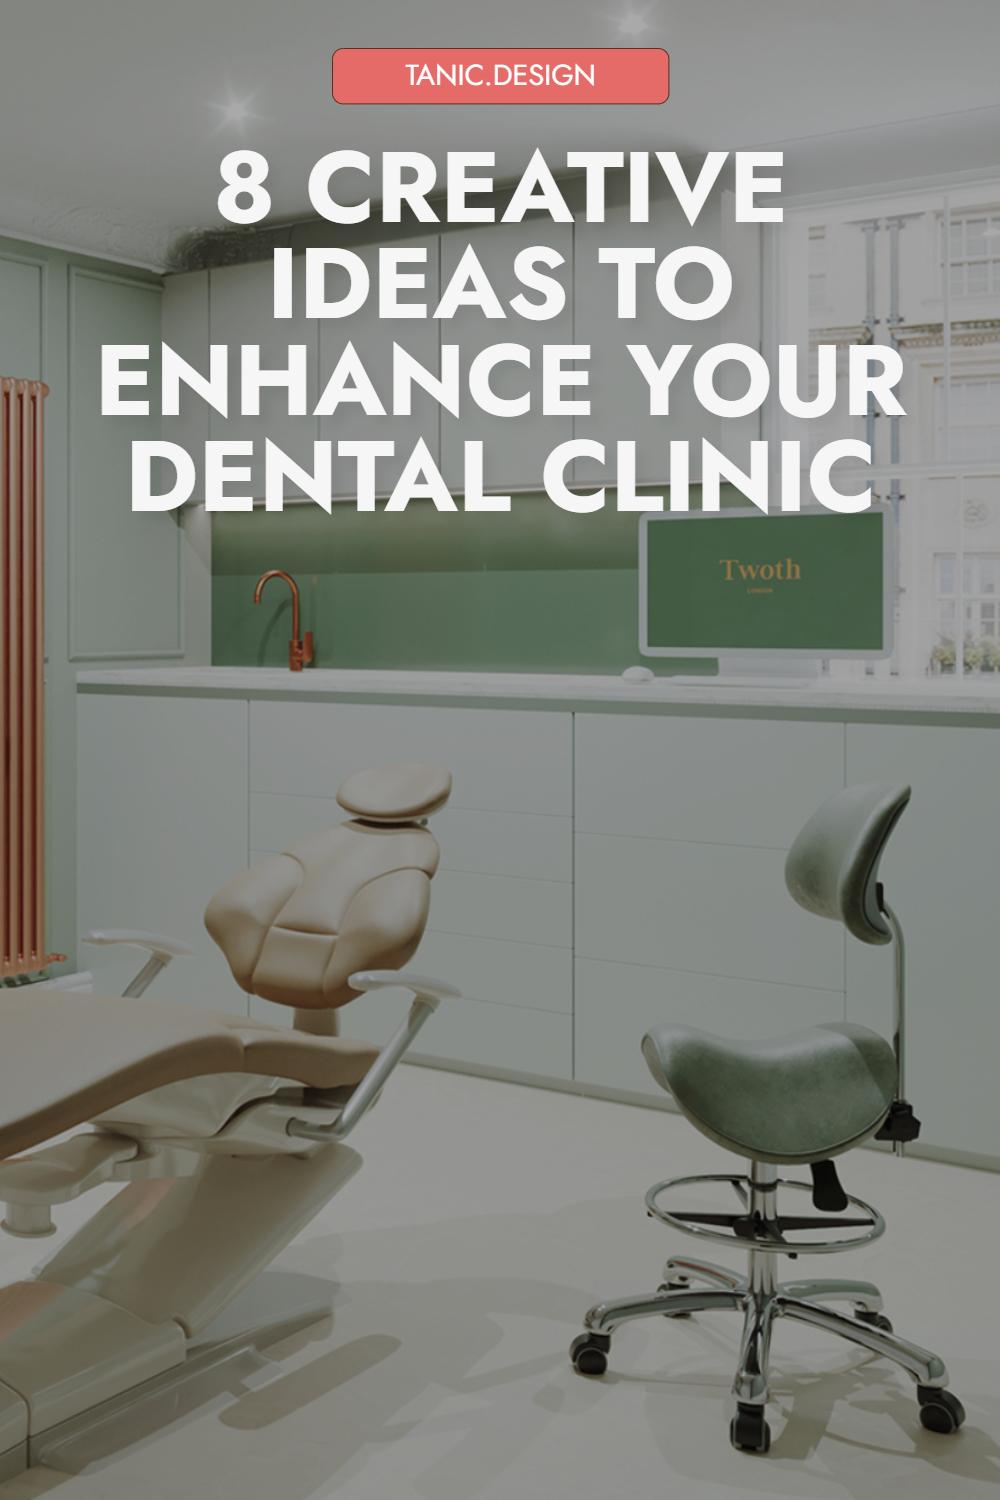 Explore inventive interior design concepts for dental clinics